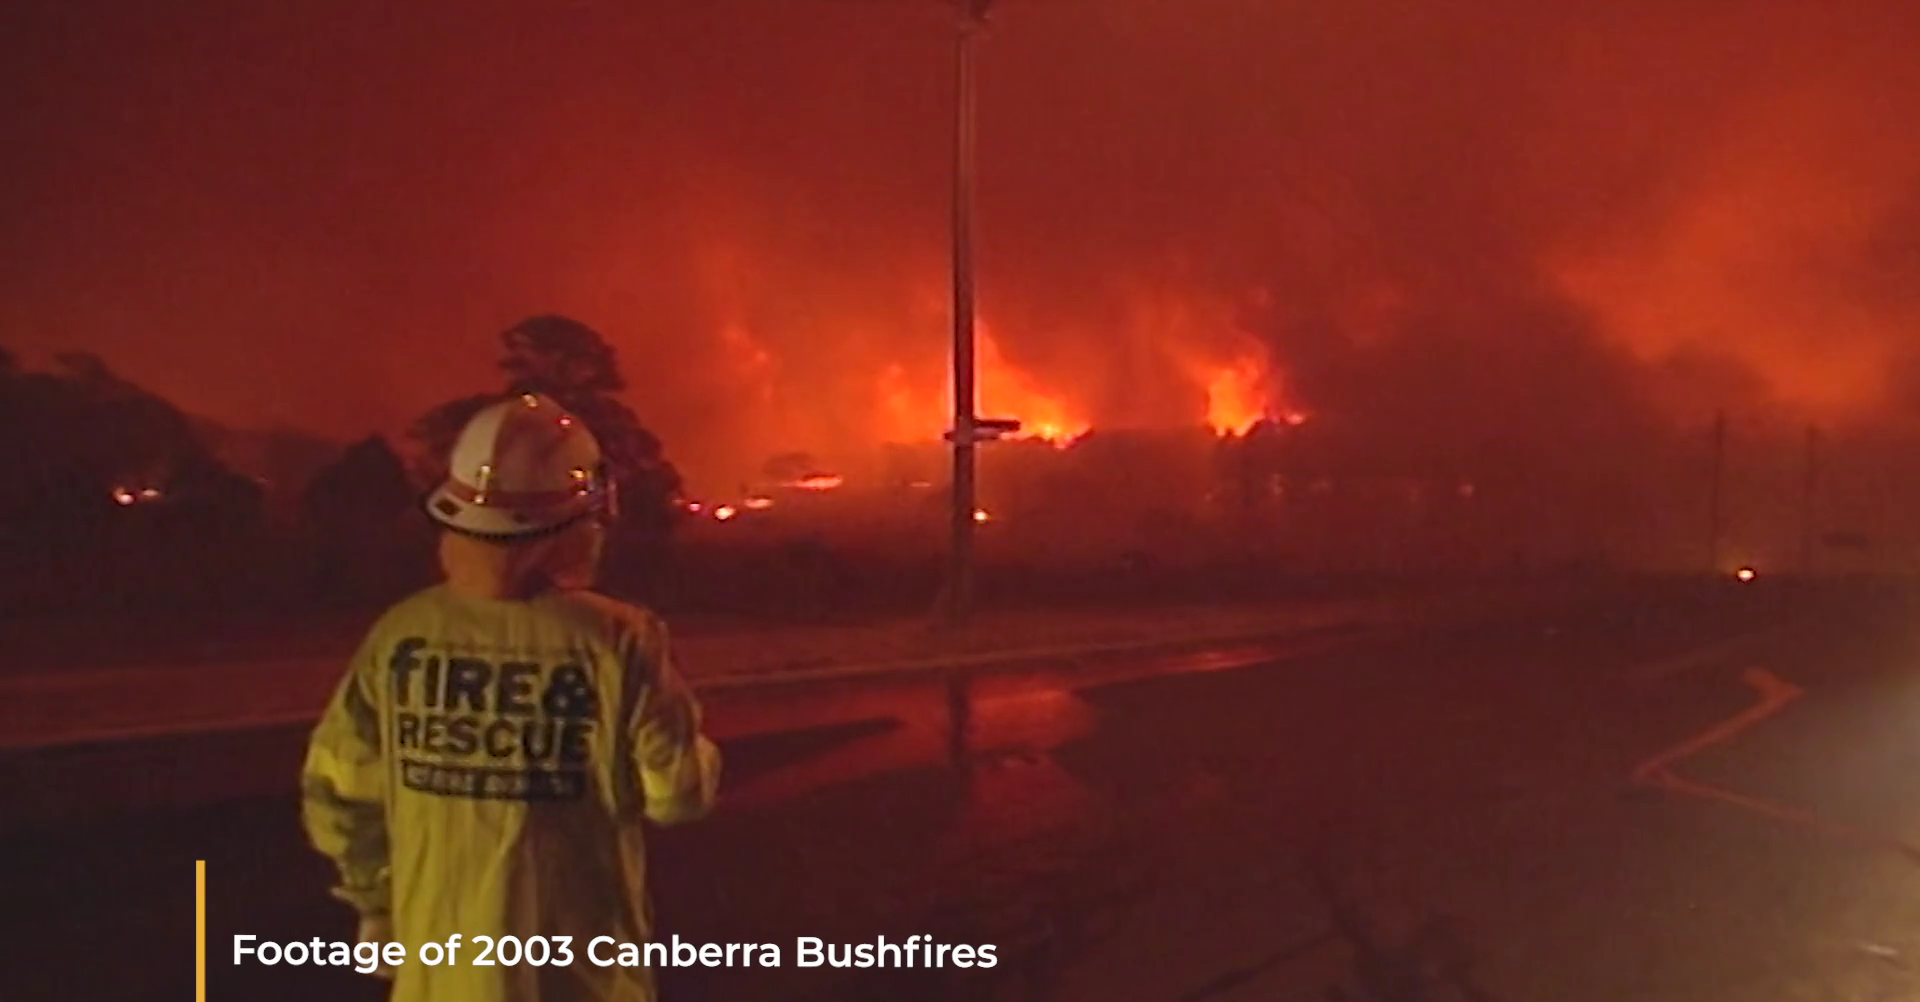 Bushfire safety